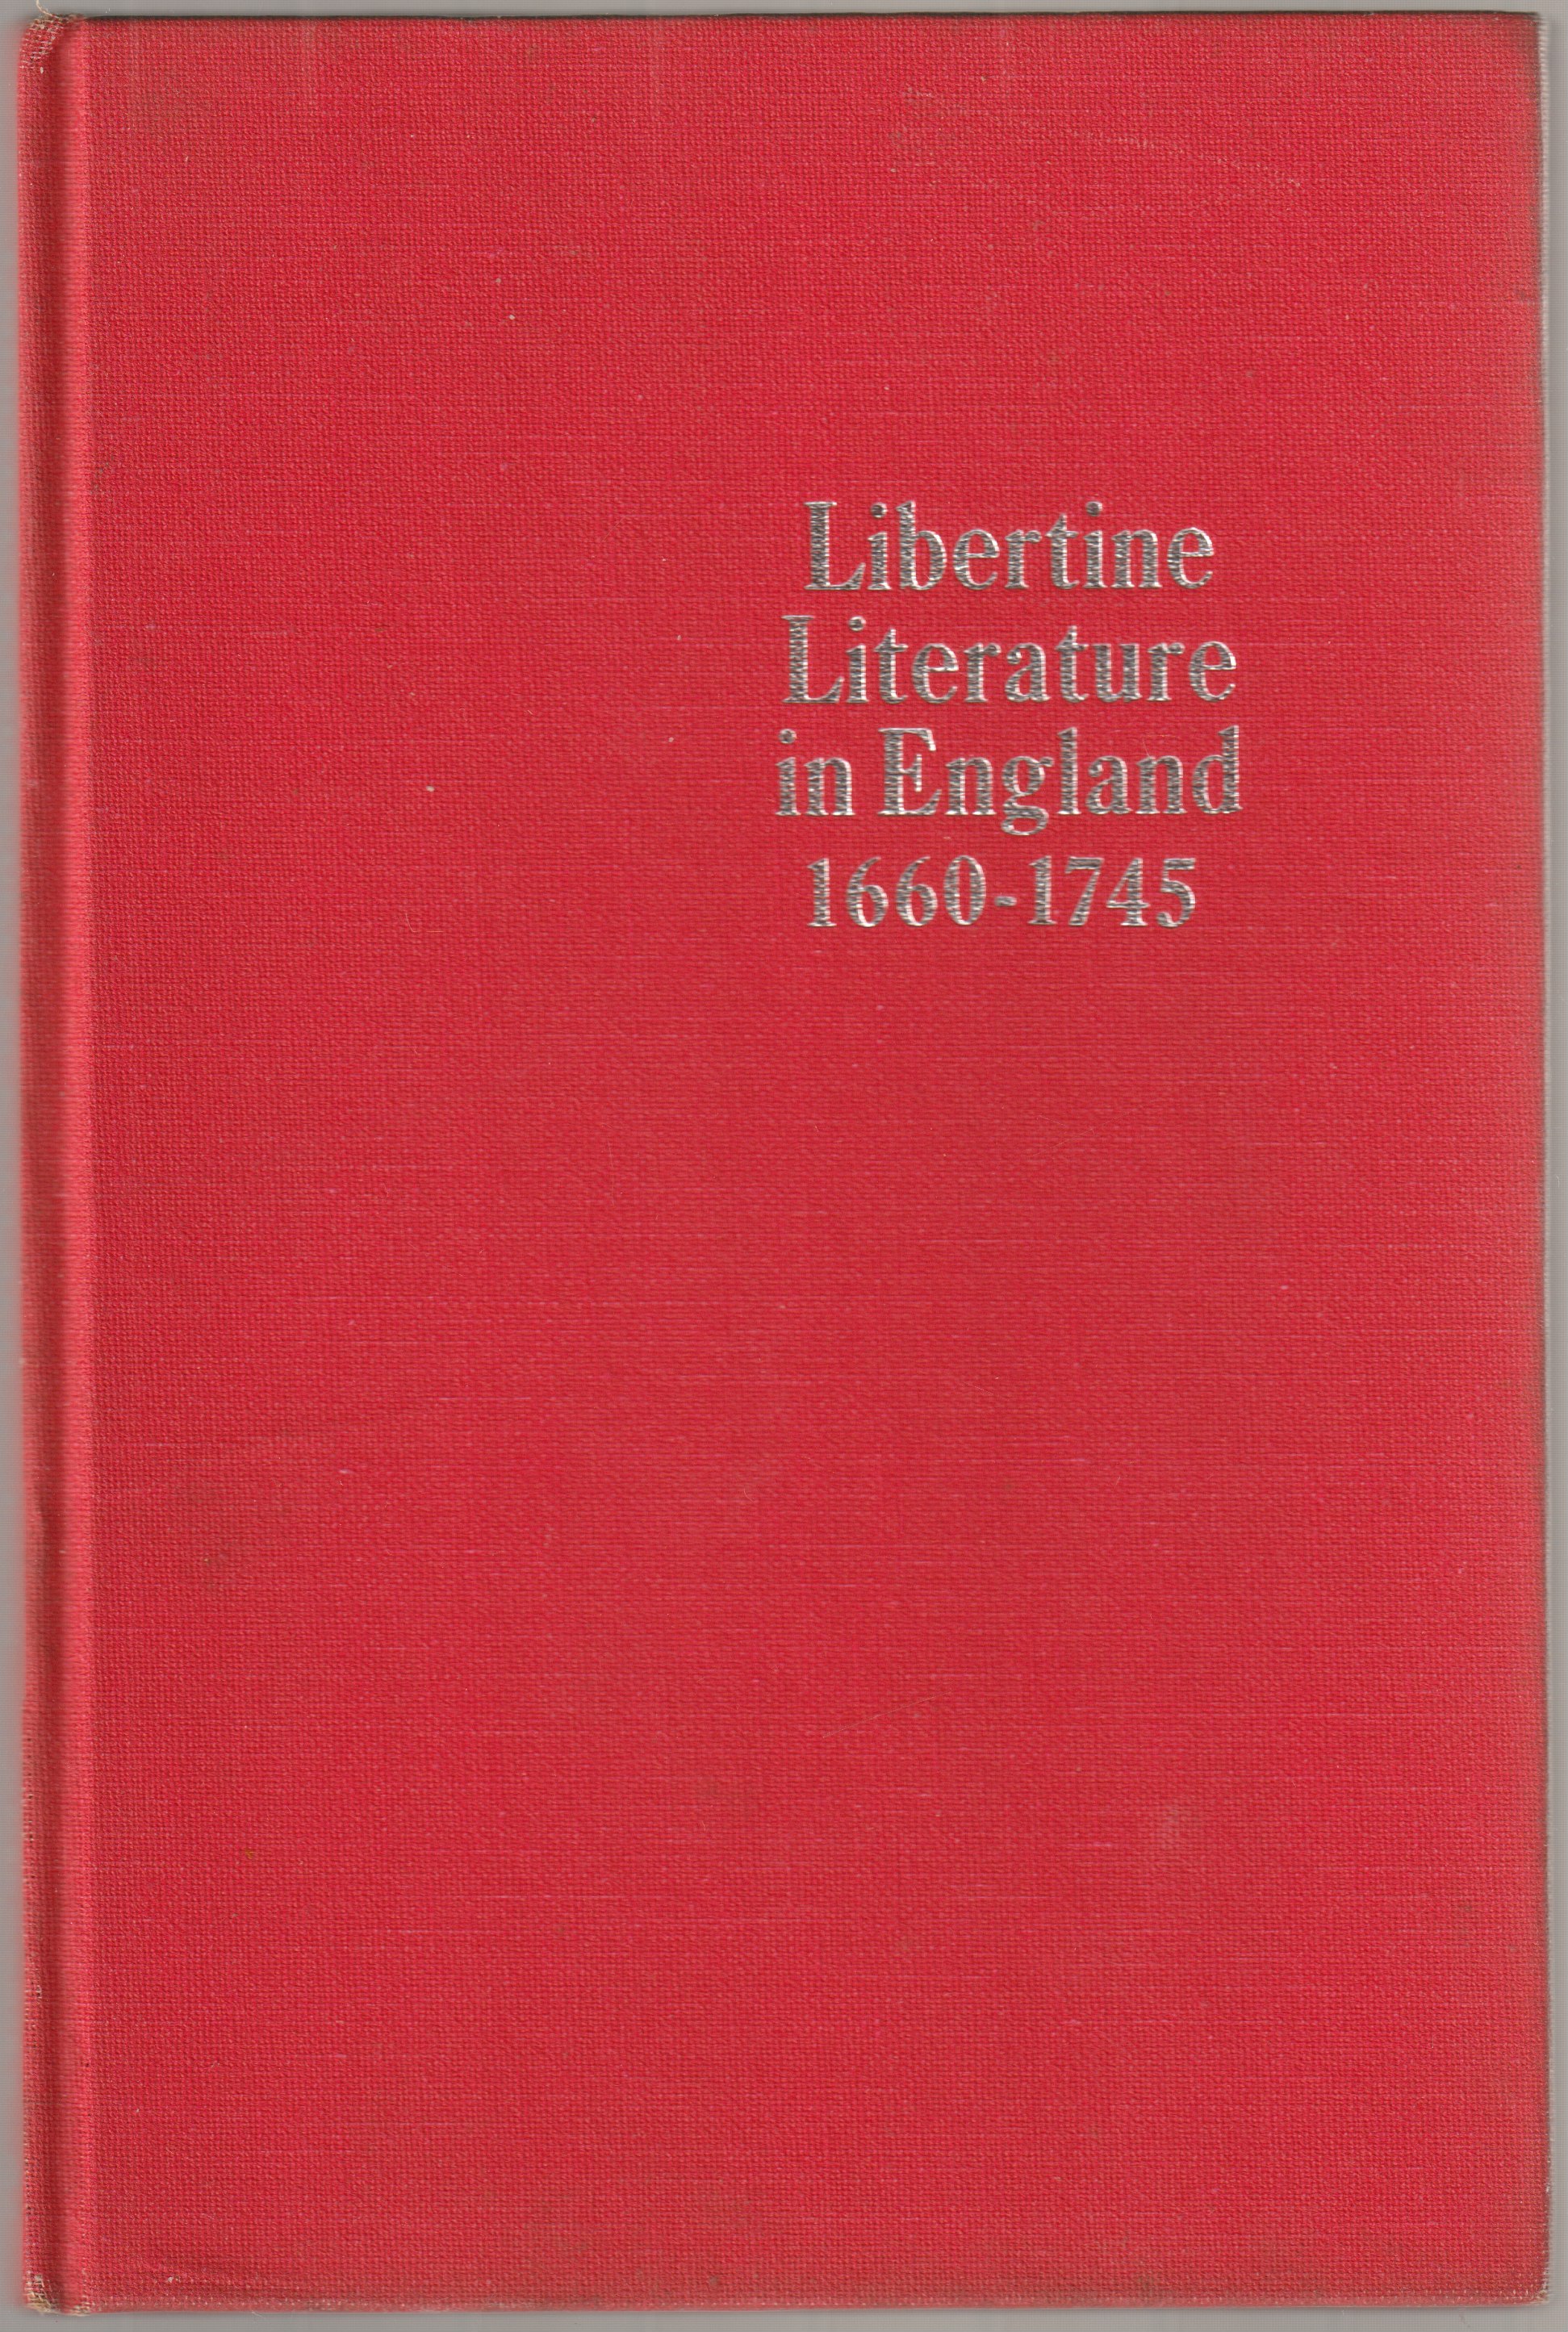 Libertine literature in England, 1660-1745.